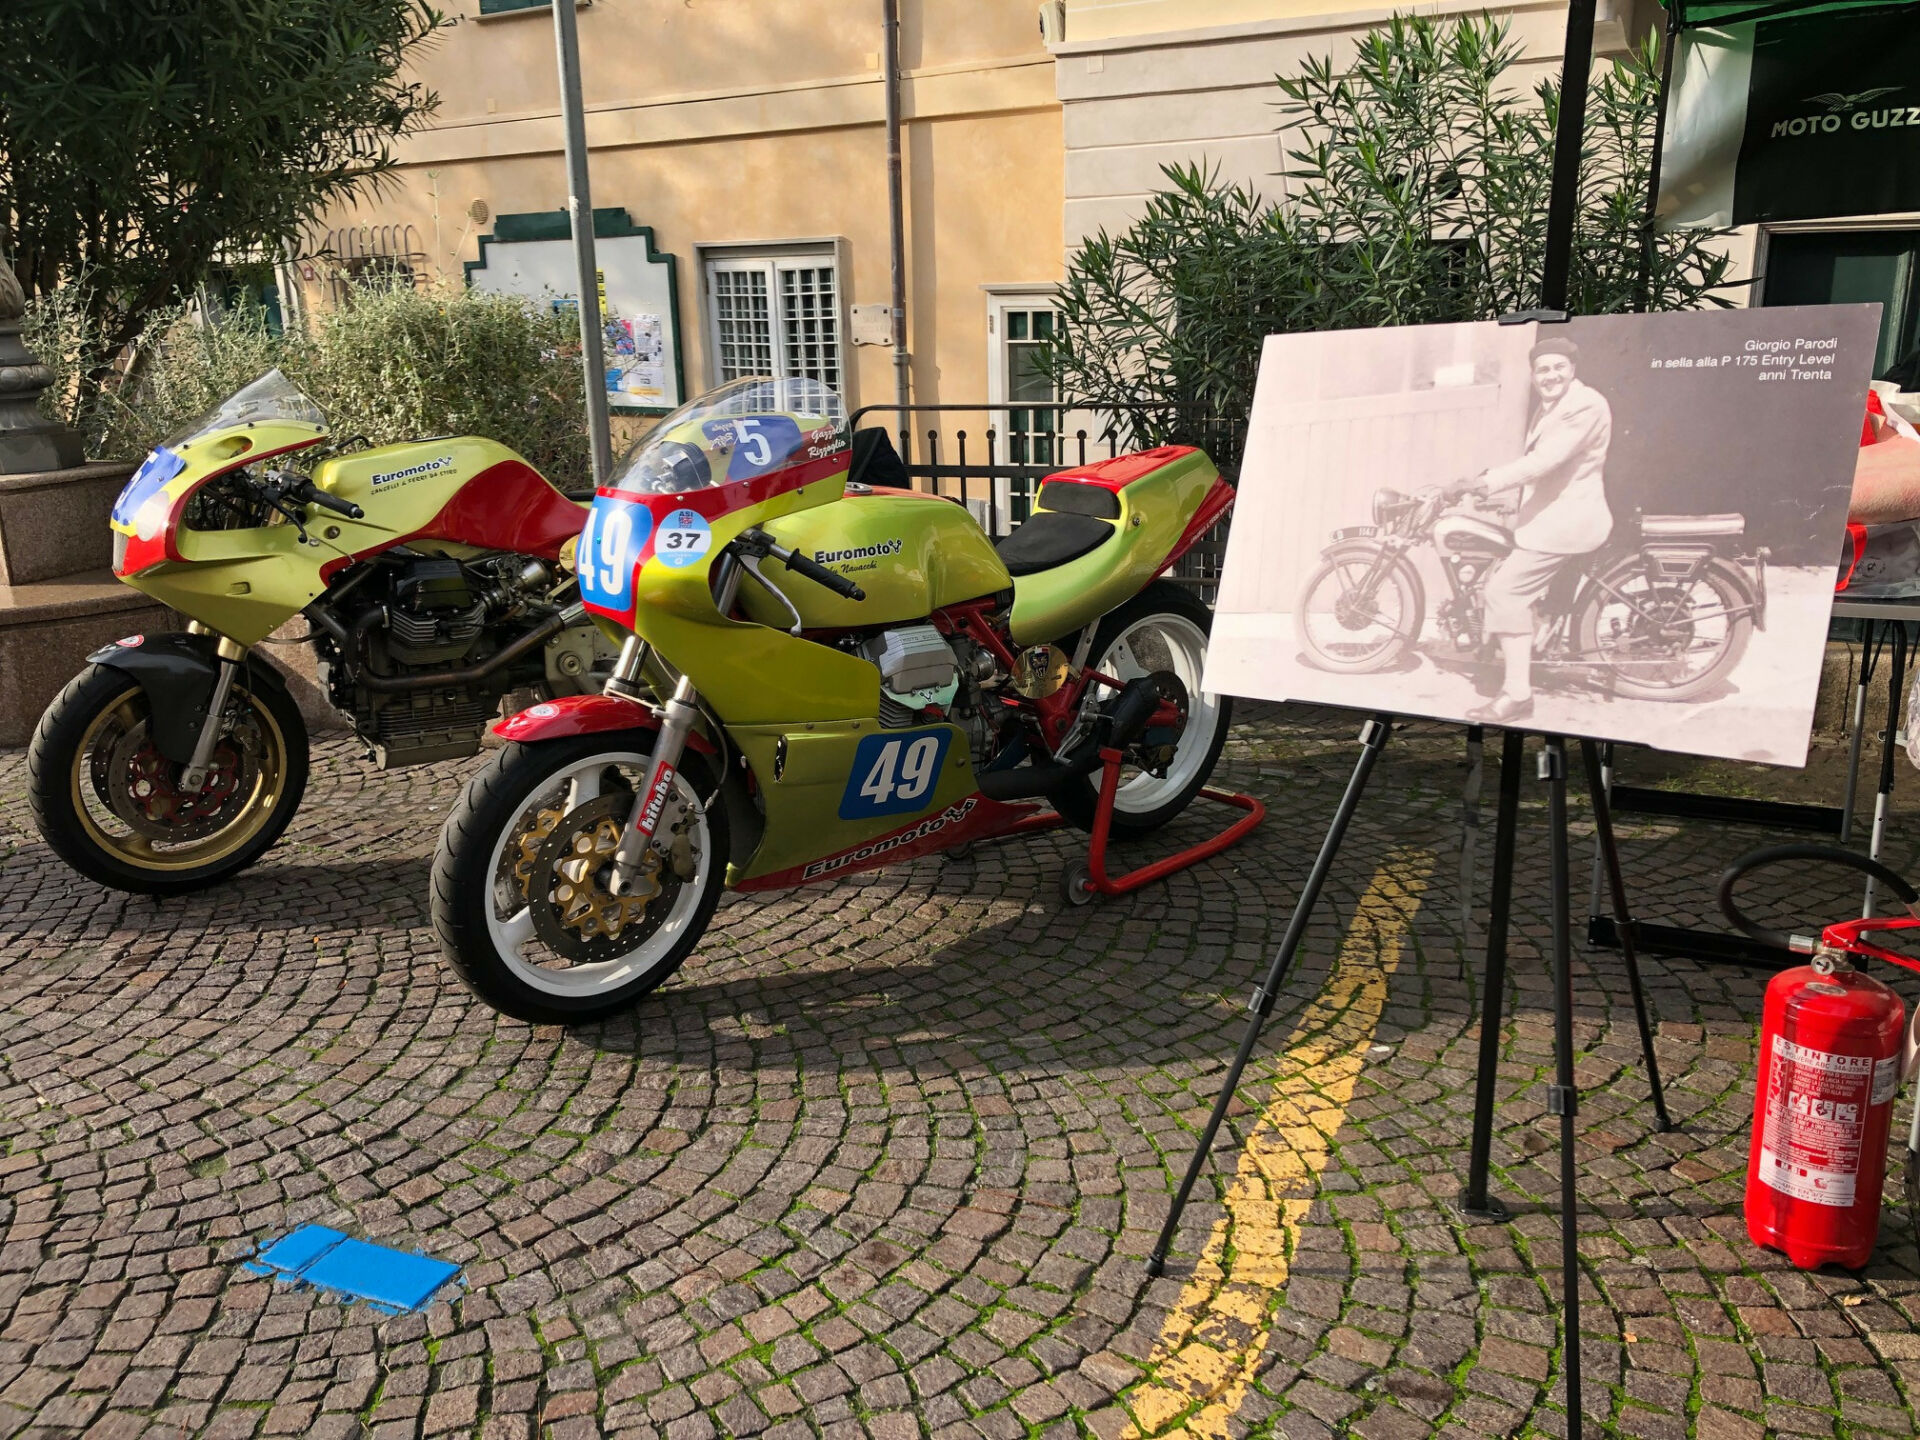 Moto Guzzi racebikes on display at a motorcycle and air show hosted by the Giorgio Parodi Association in Italy. Photo courtesy Giorgio Parodi Association.